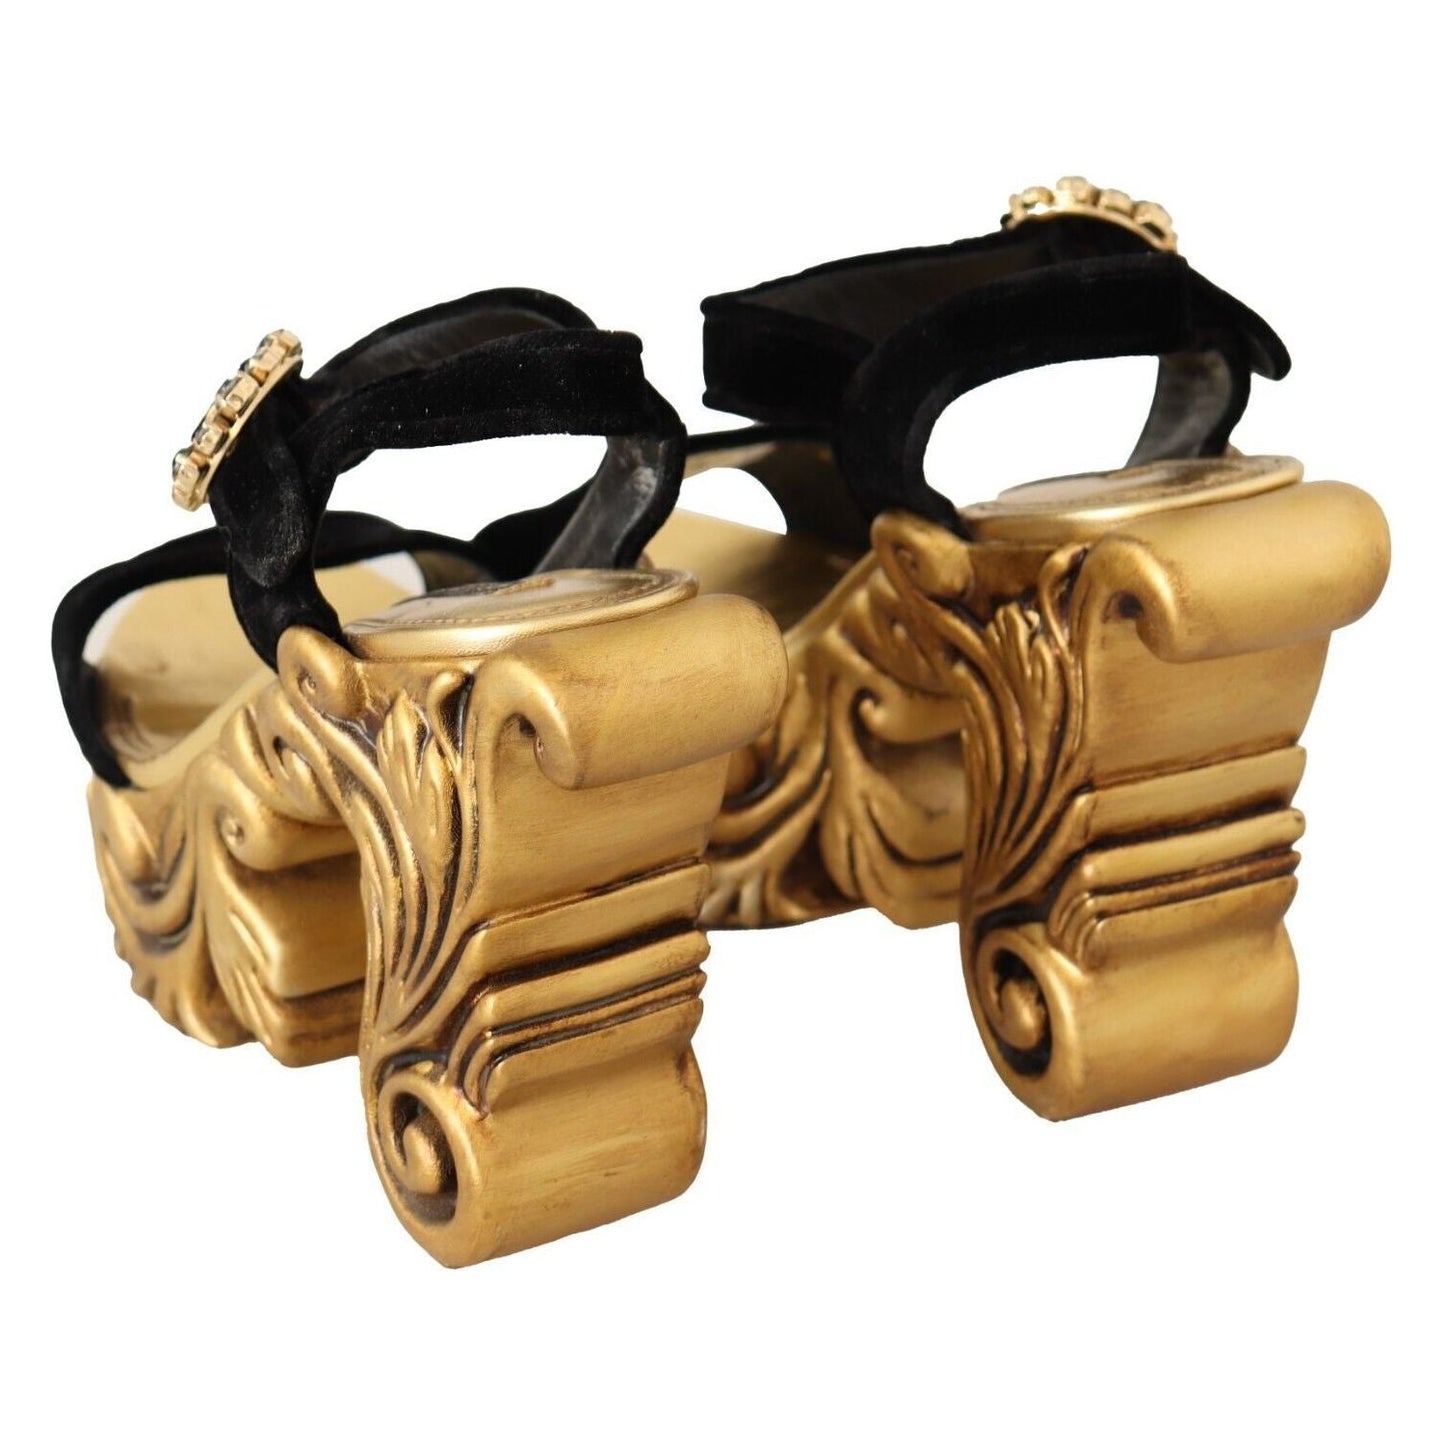 Dolce & Gabbana Baroque Velvet Heels in Black and Gold black-gold-baroque-velvet-heels-crystal-shoes